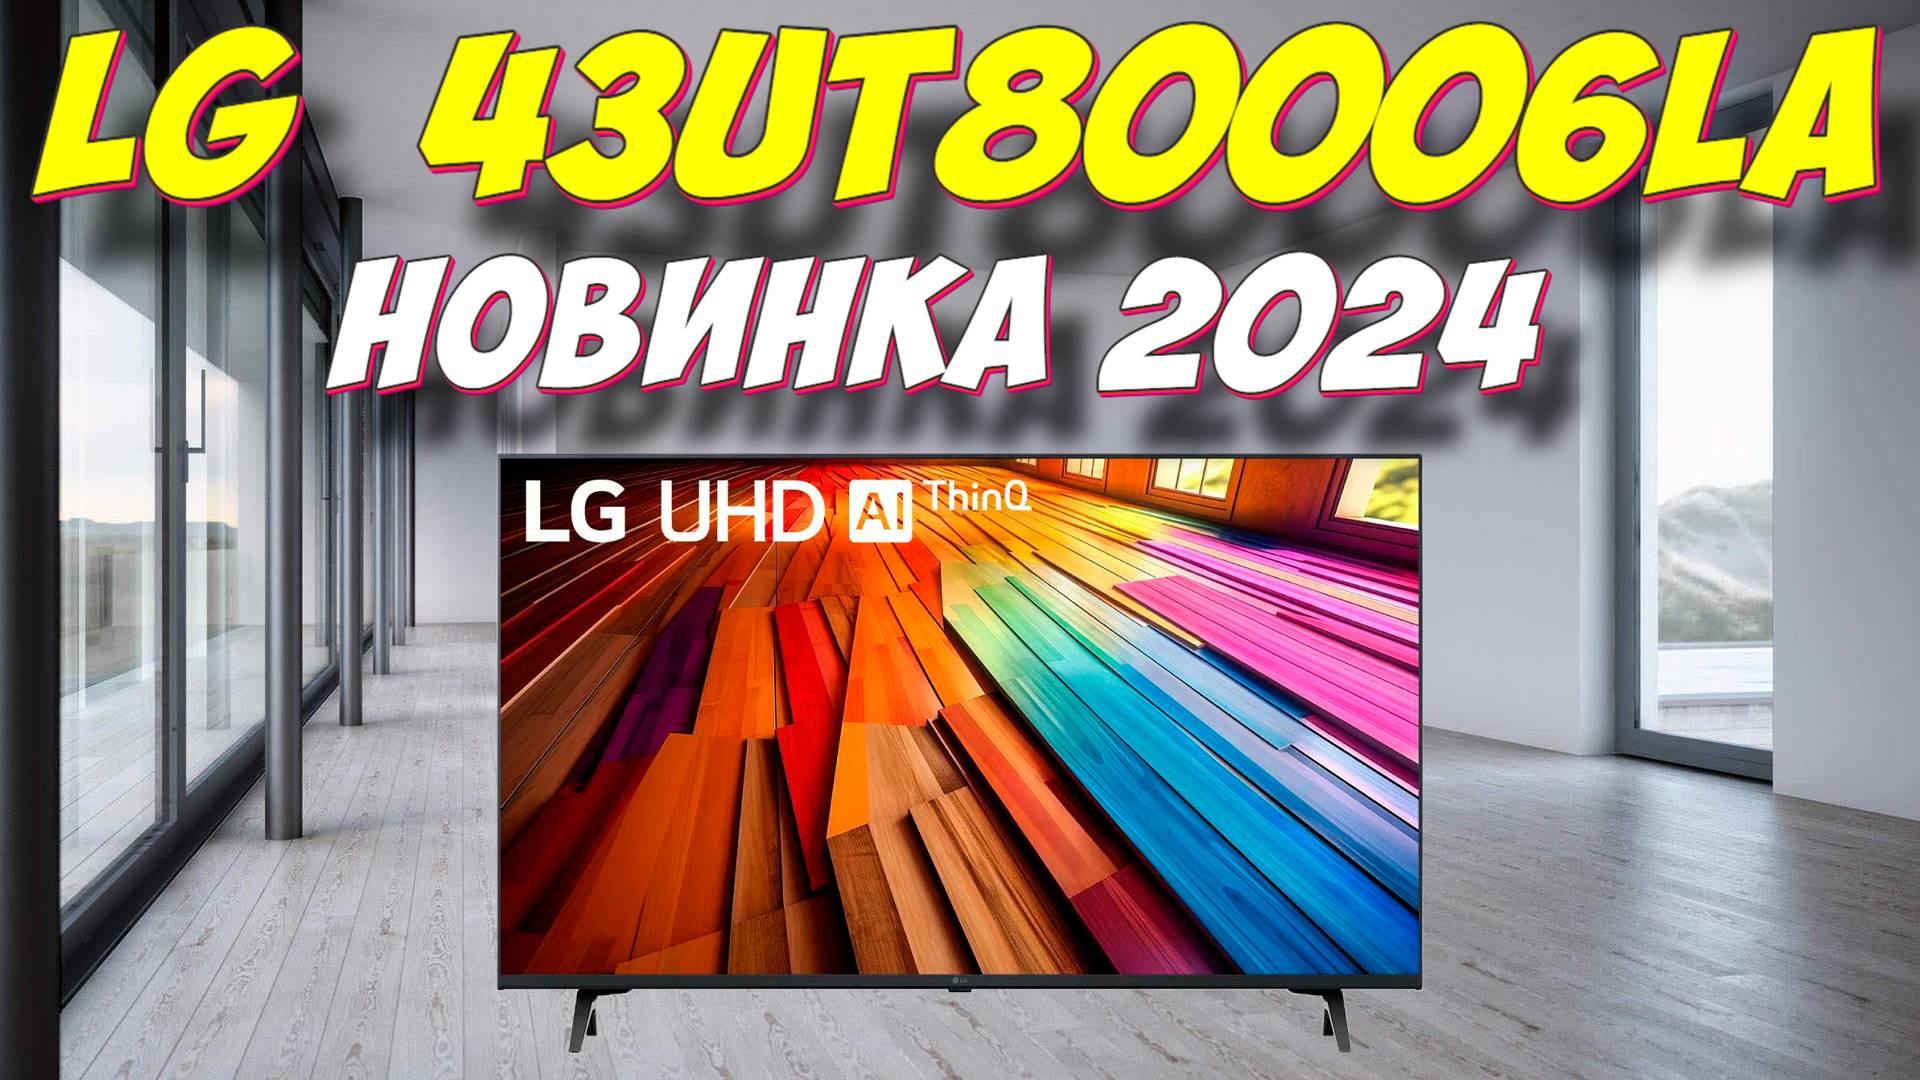 Телевизор LG 43UT80006LA